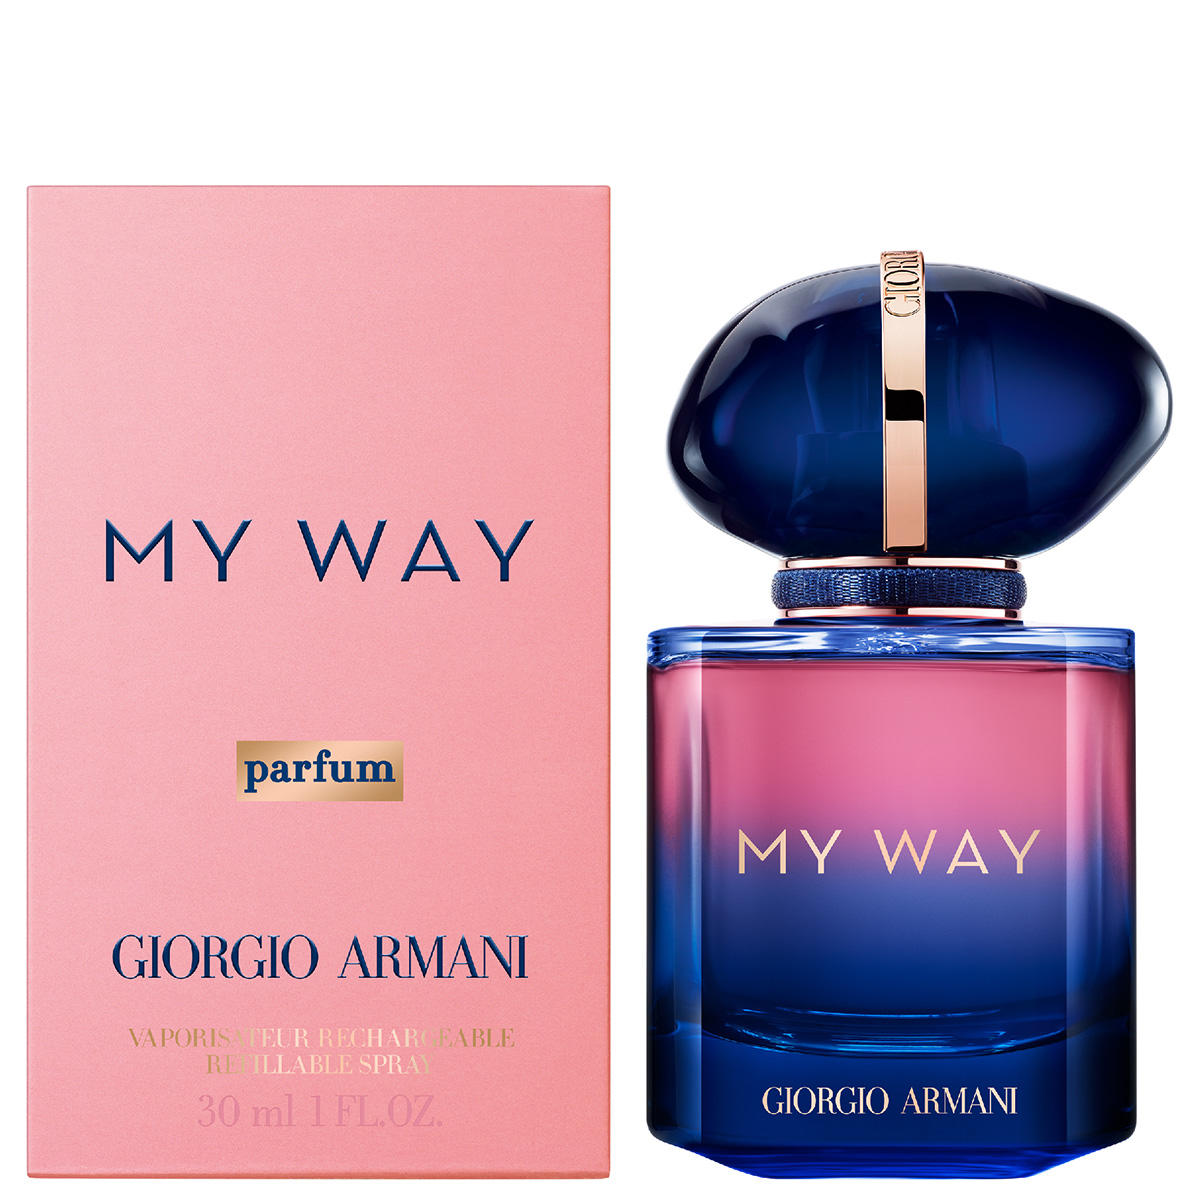 Giorgio Armani My Way Le Parfum 30 ml - 2